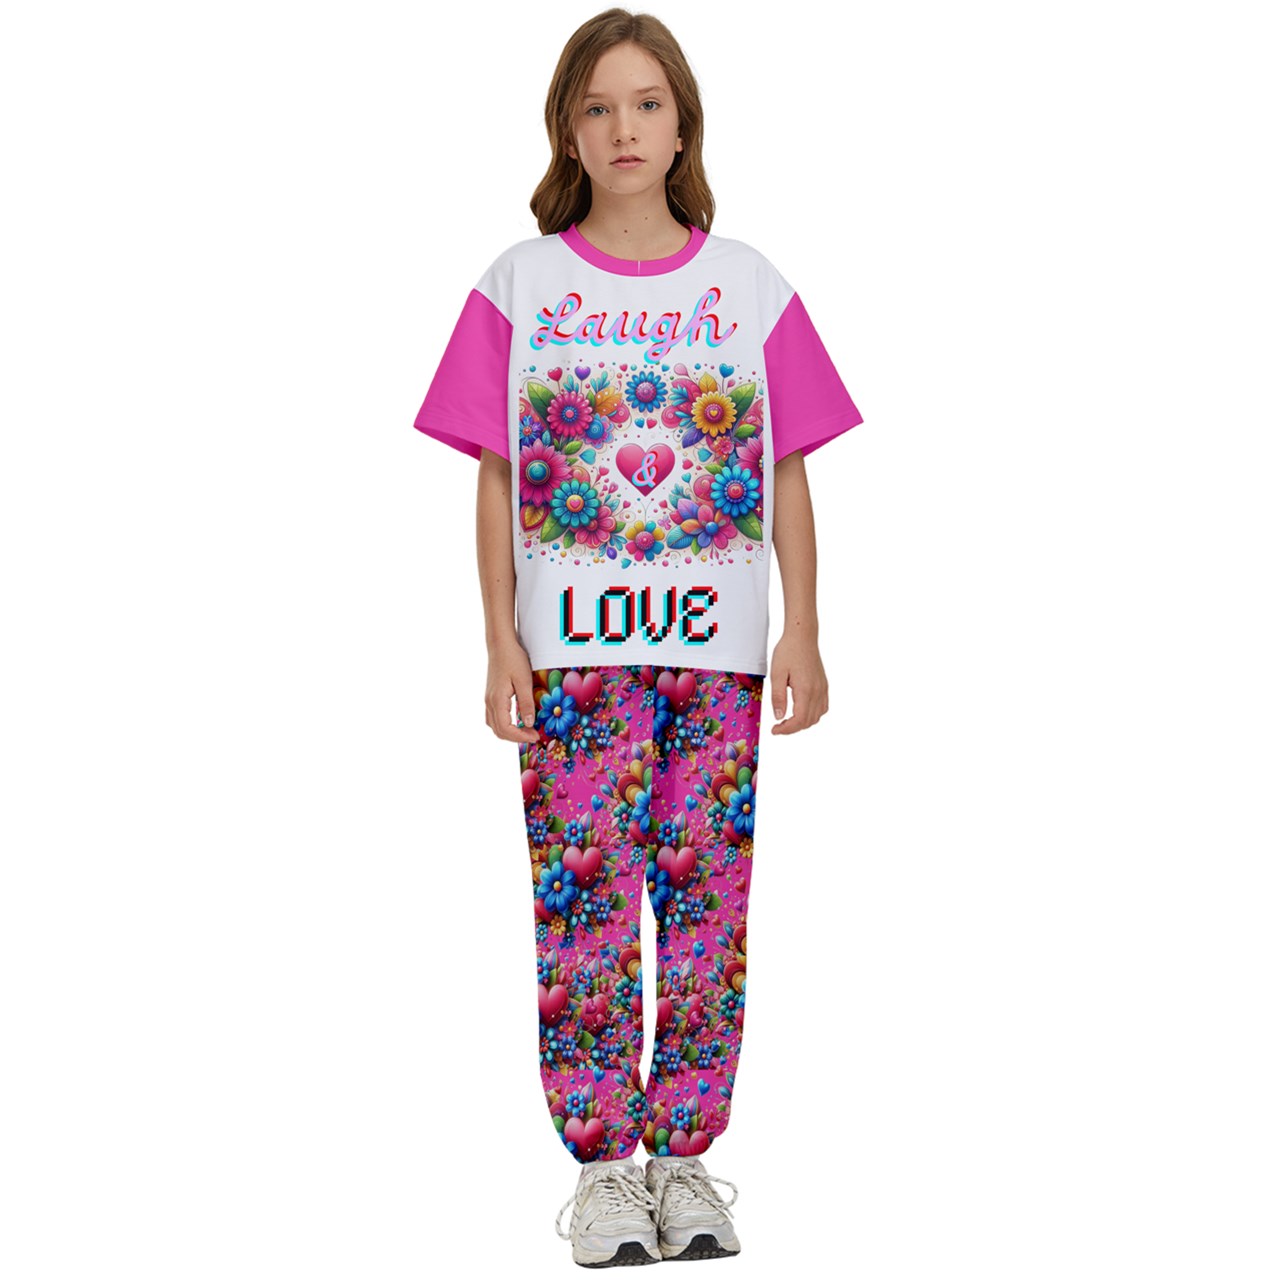 Laugh Love - Kids' T-Shirt and Pants Outfit Set - girls pants set at TFC&H Co.